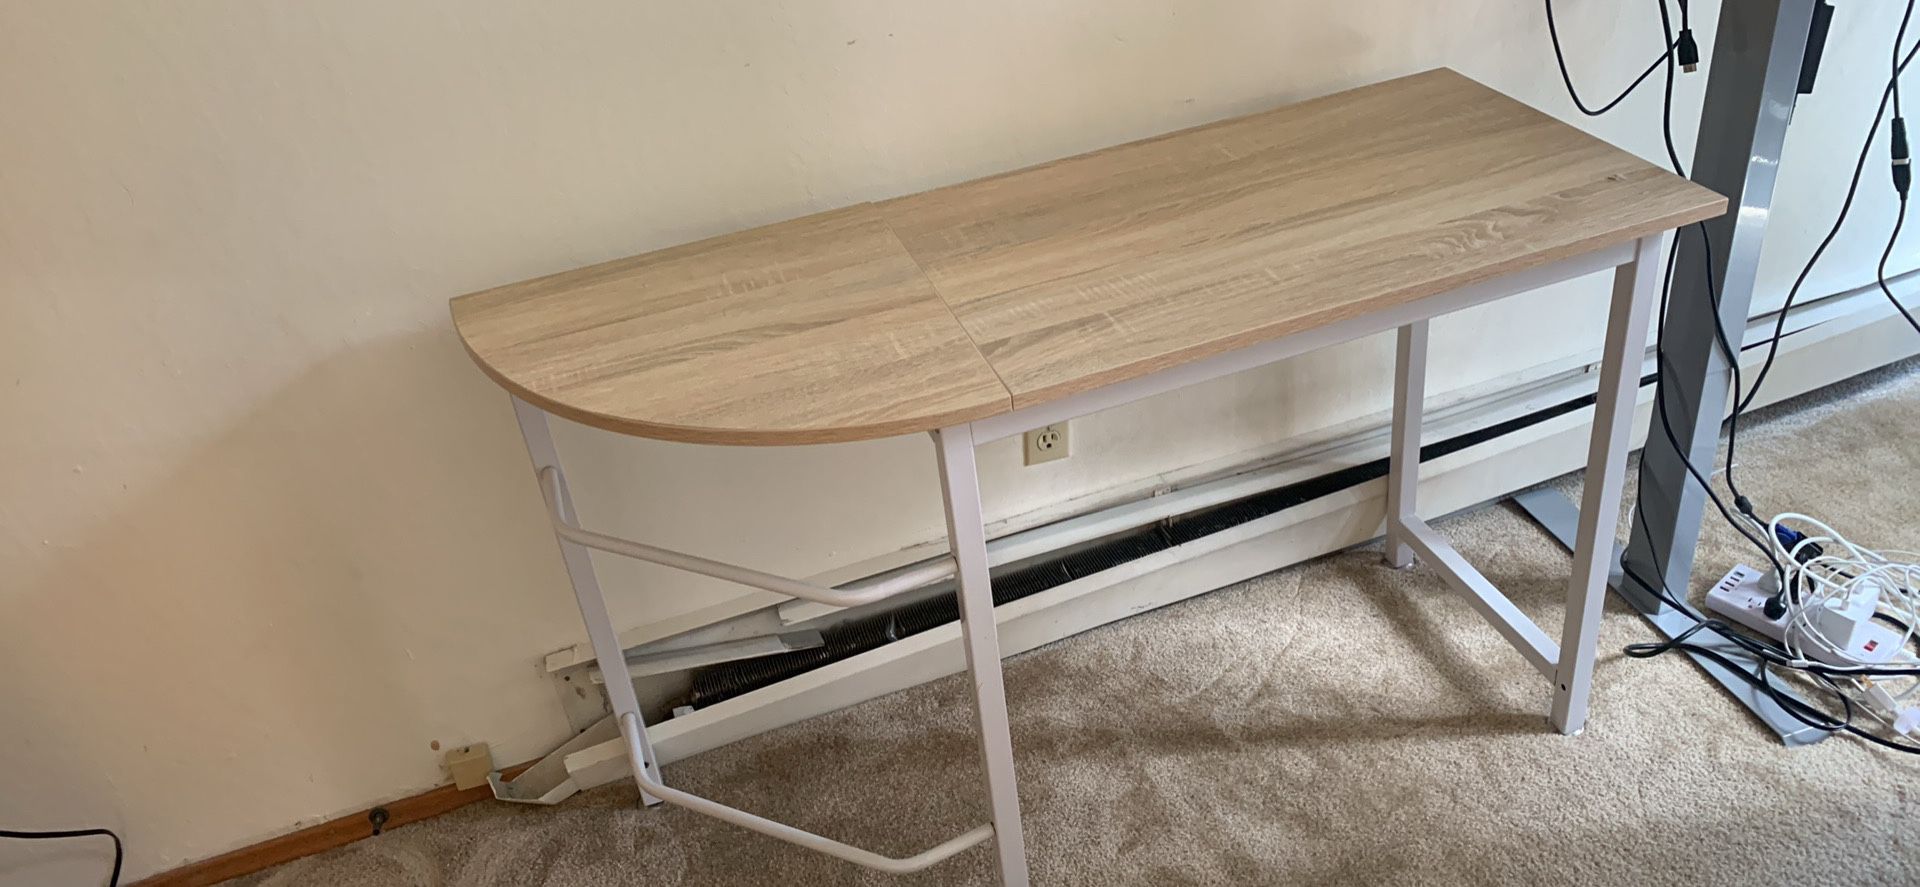 Wood Desk For Cheap